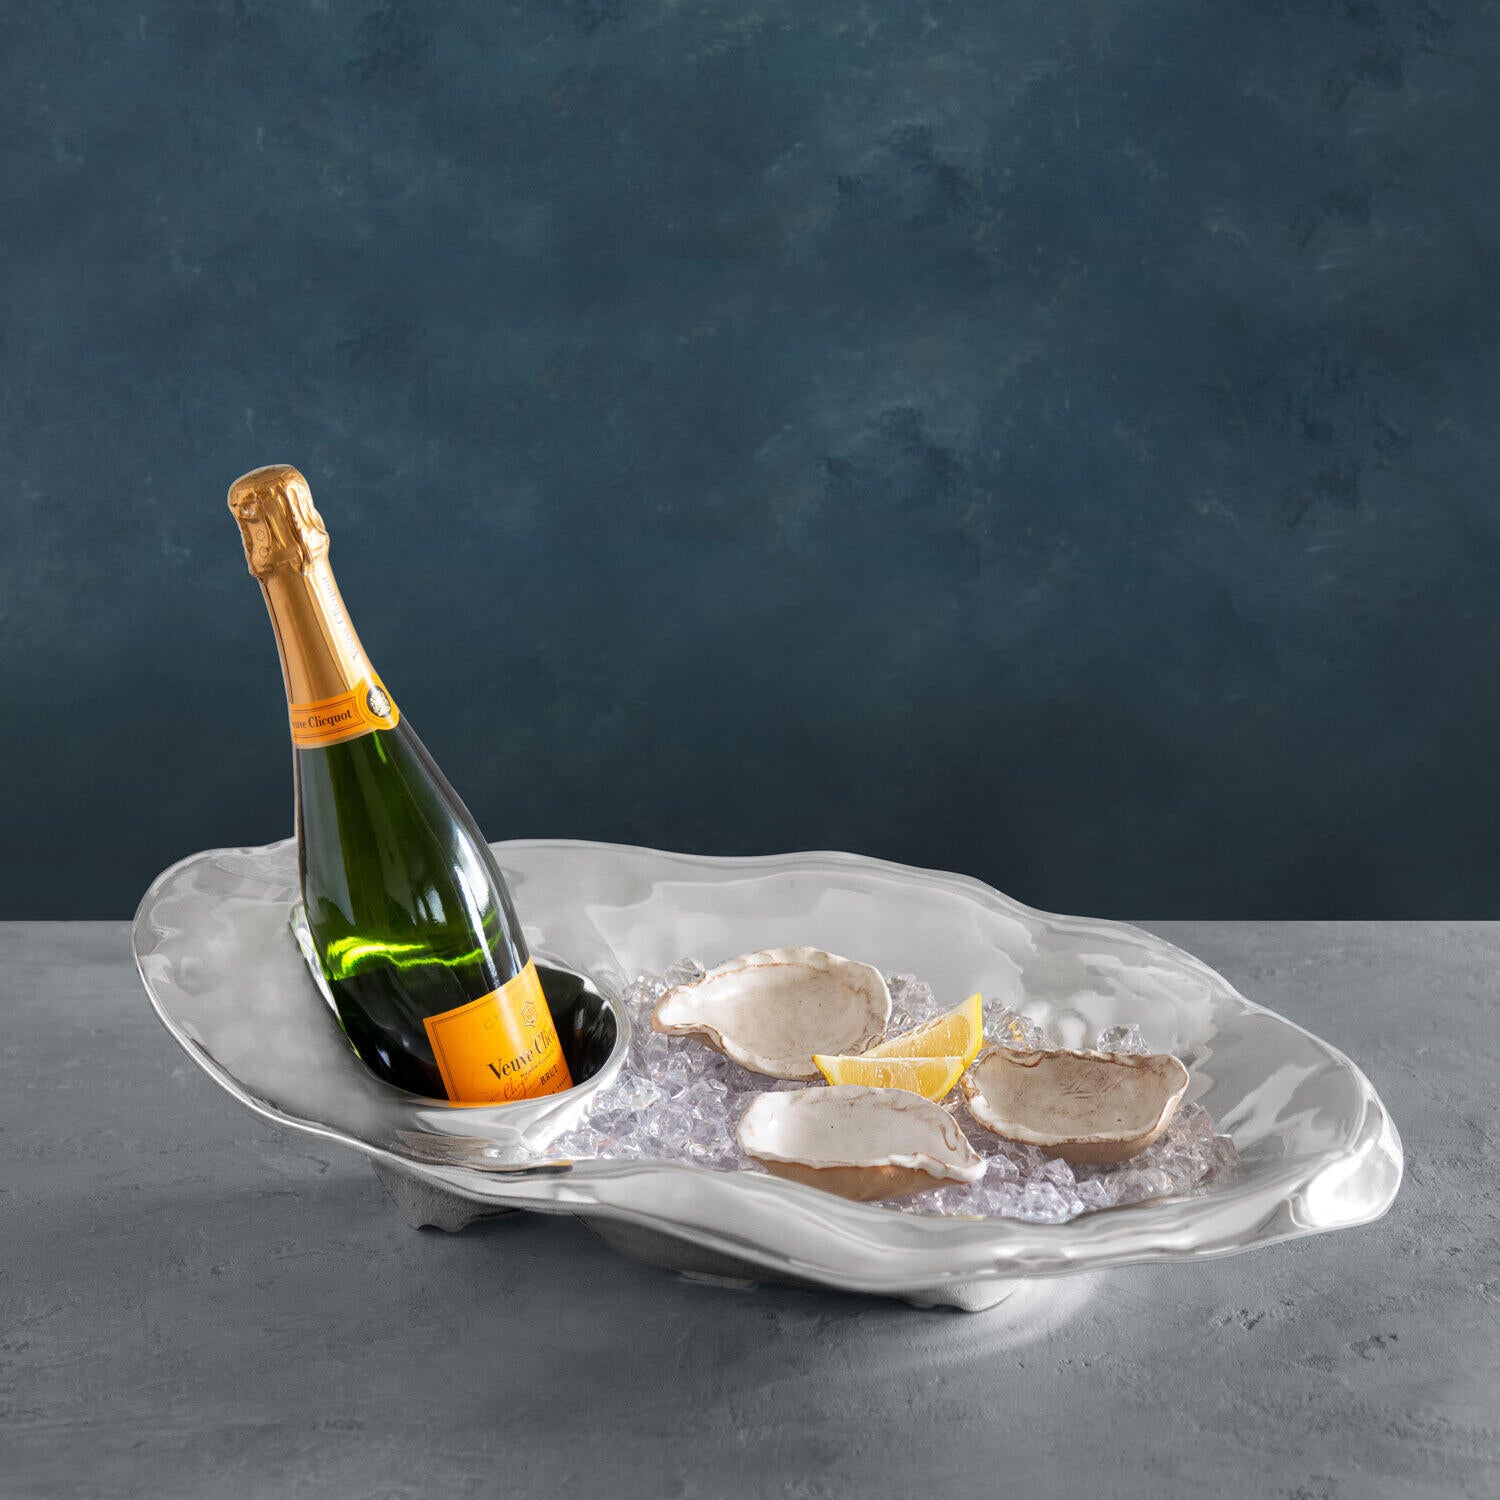 Veuve Clicquot Champagne Flute Plastic Glass Ice Bucket Dishwasher